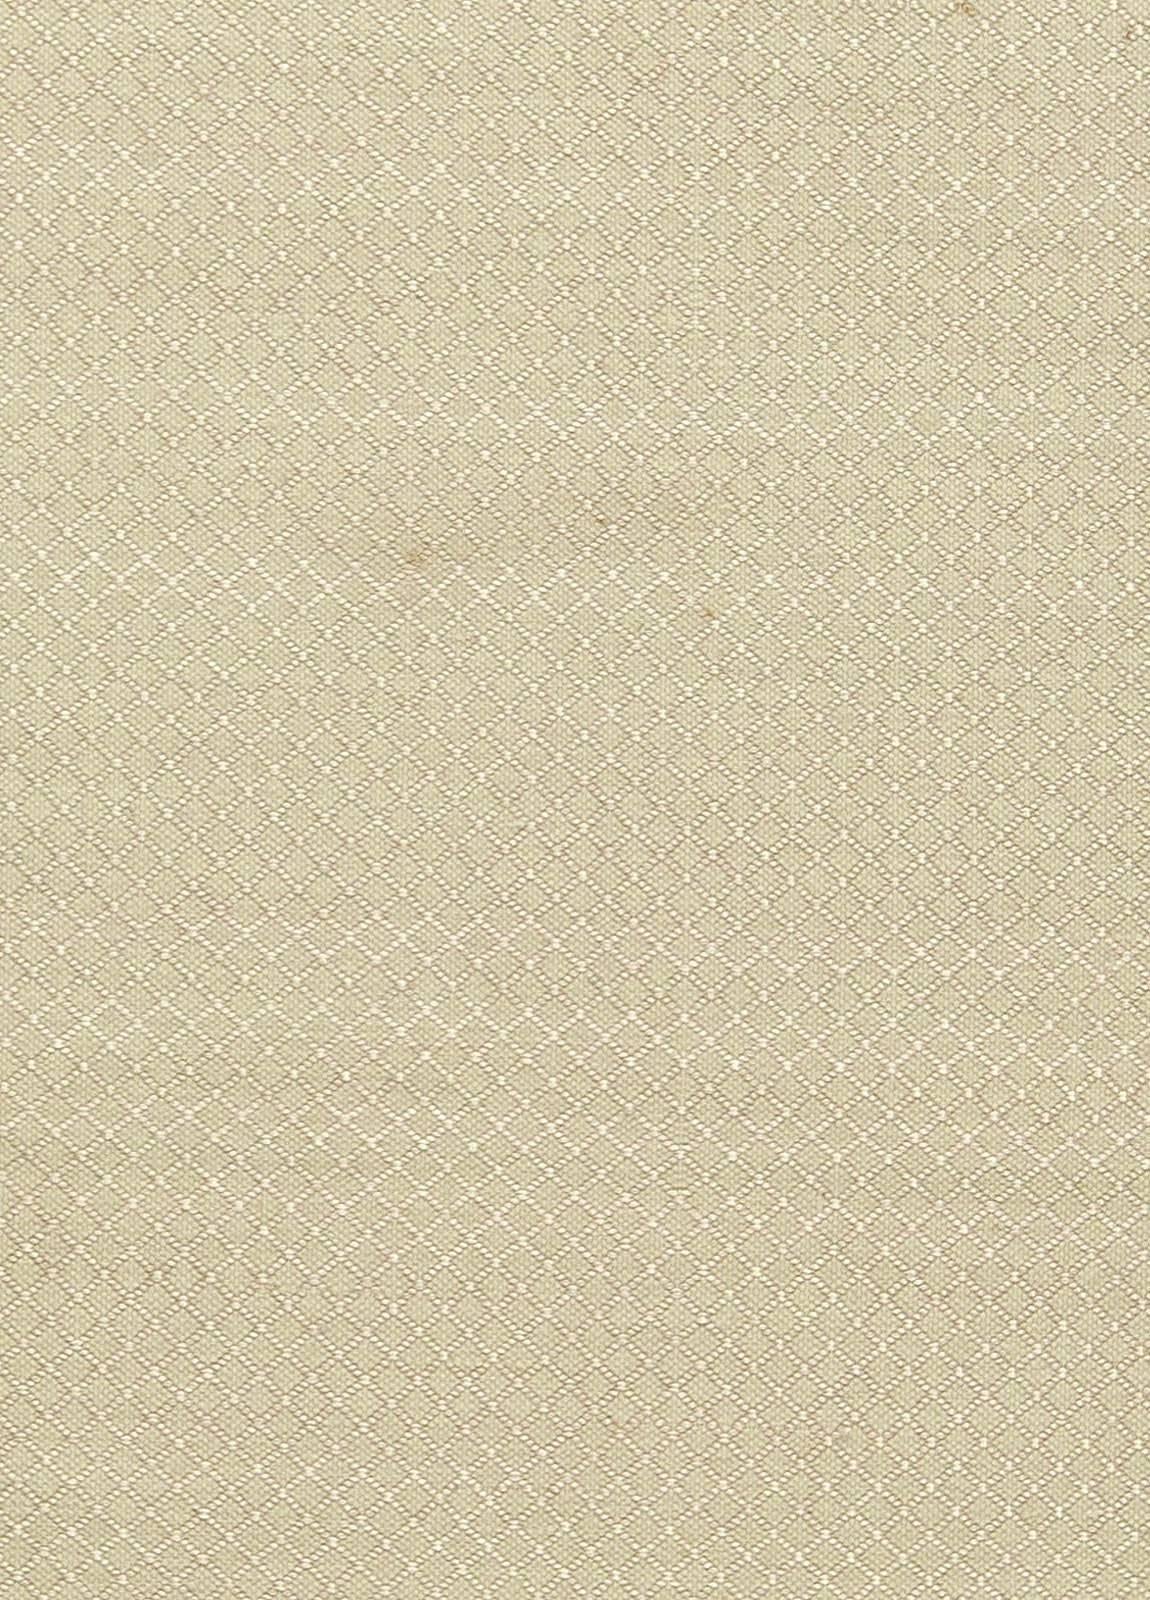 Modern Geometric Beige Flat Weave Viscose Rug by Doris Leslie Blau
Size: 12'0